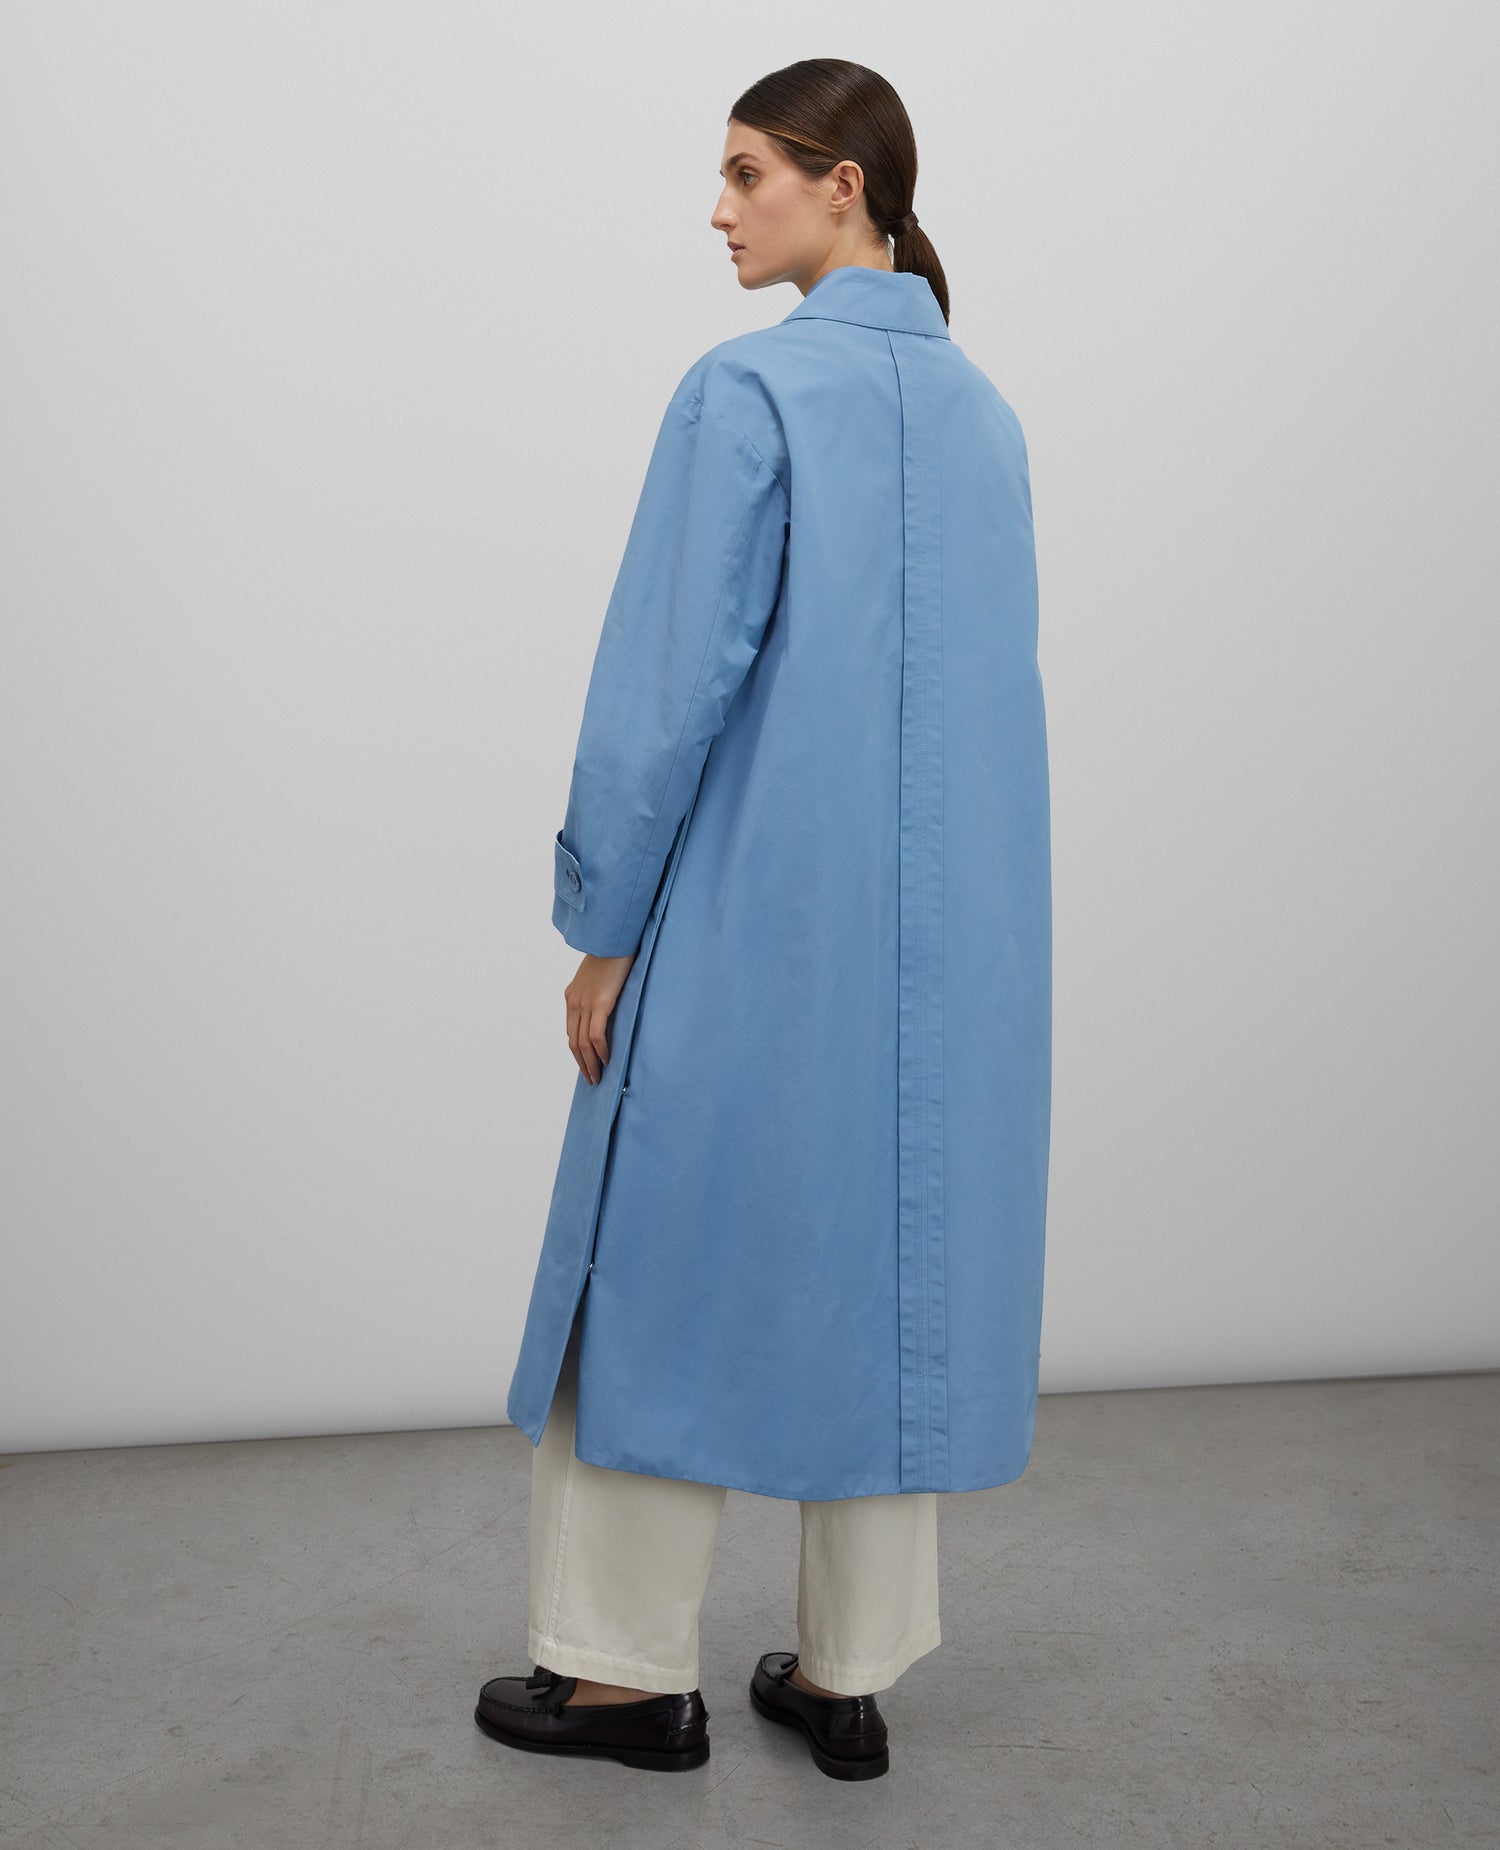 Canvas overcoat, blue